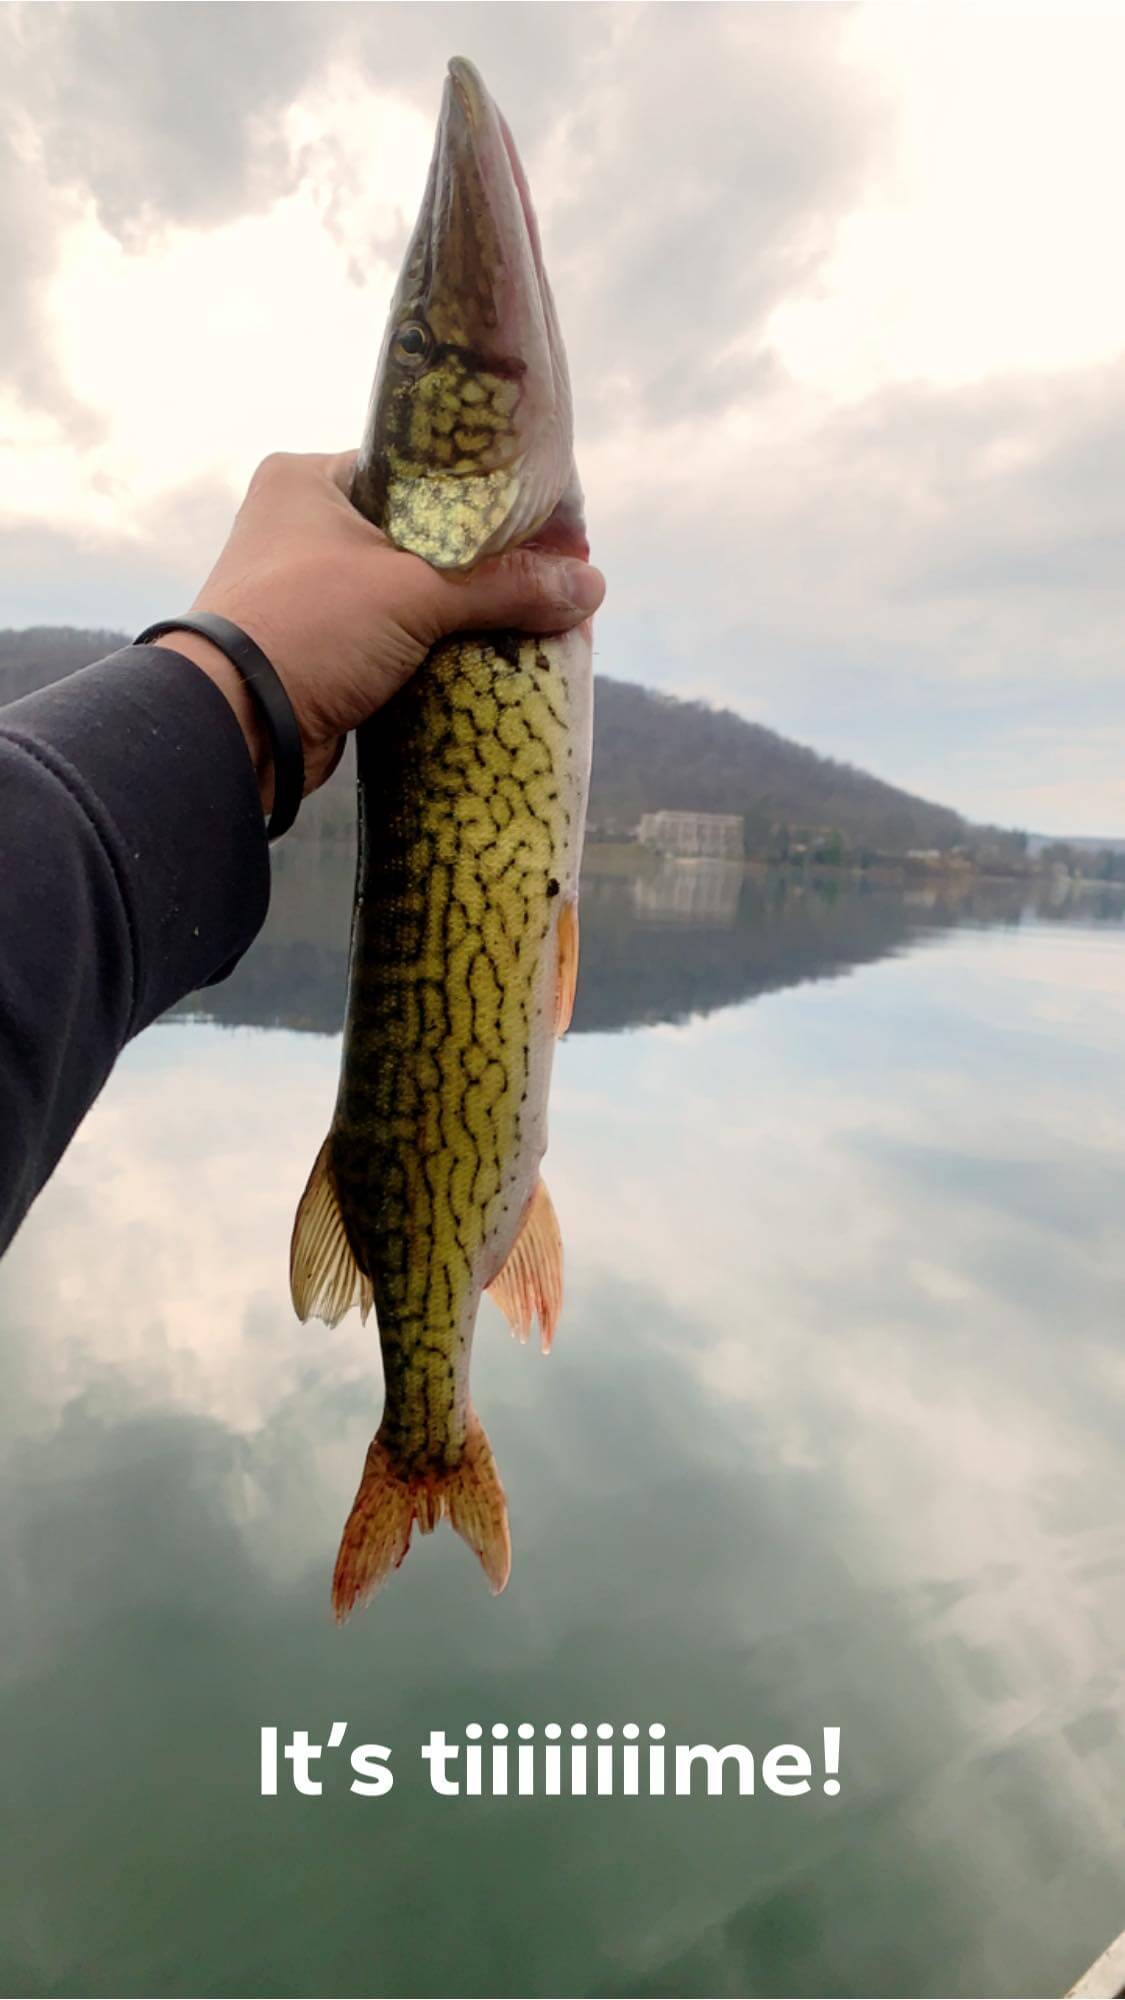 Fish Catch in Deep Creek Lake, MD by JD Eddy